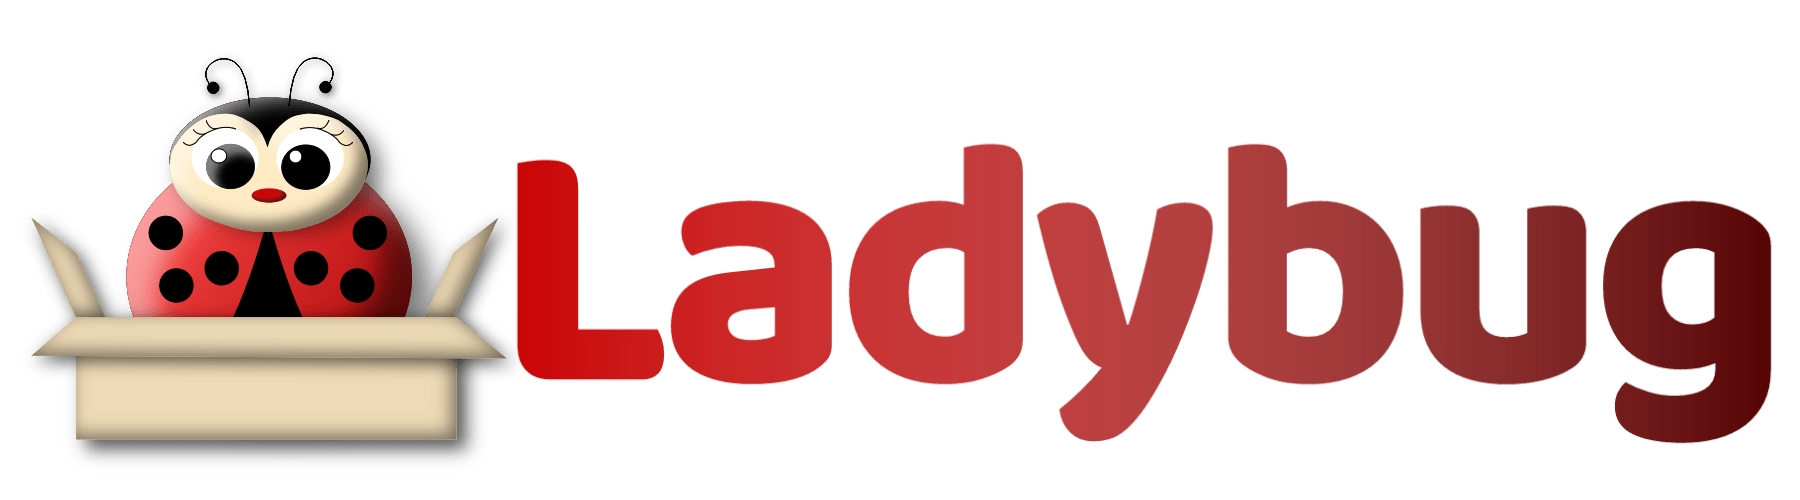 Ladybug Online Store